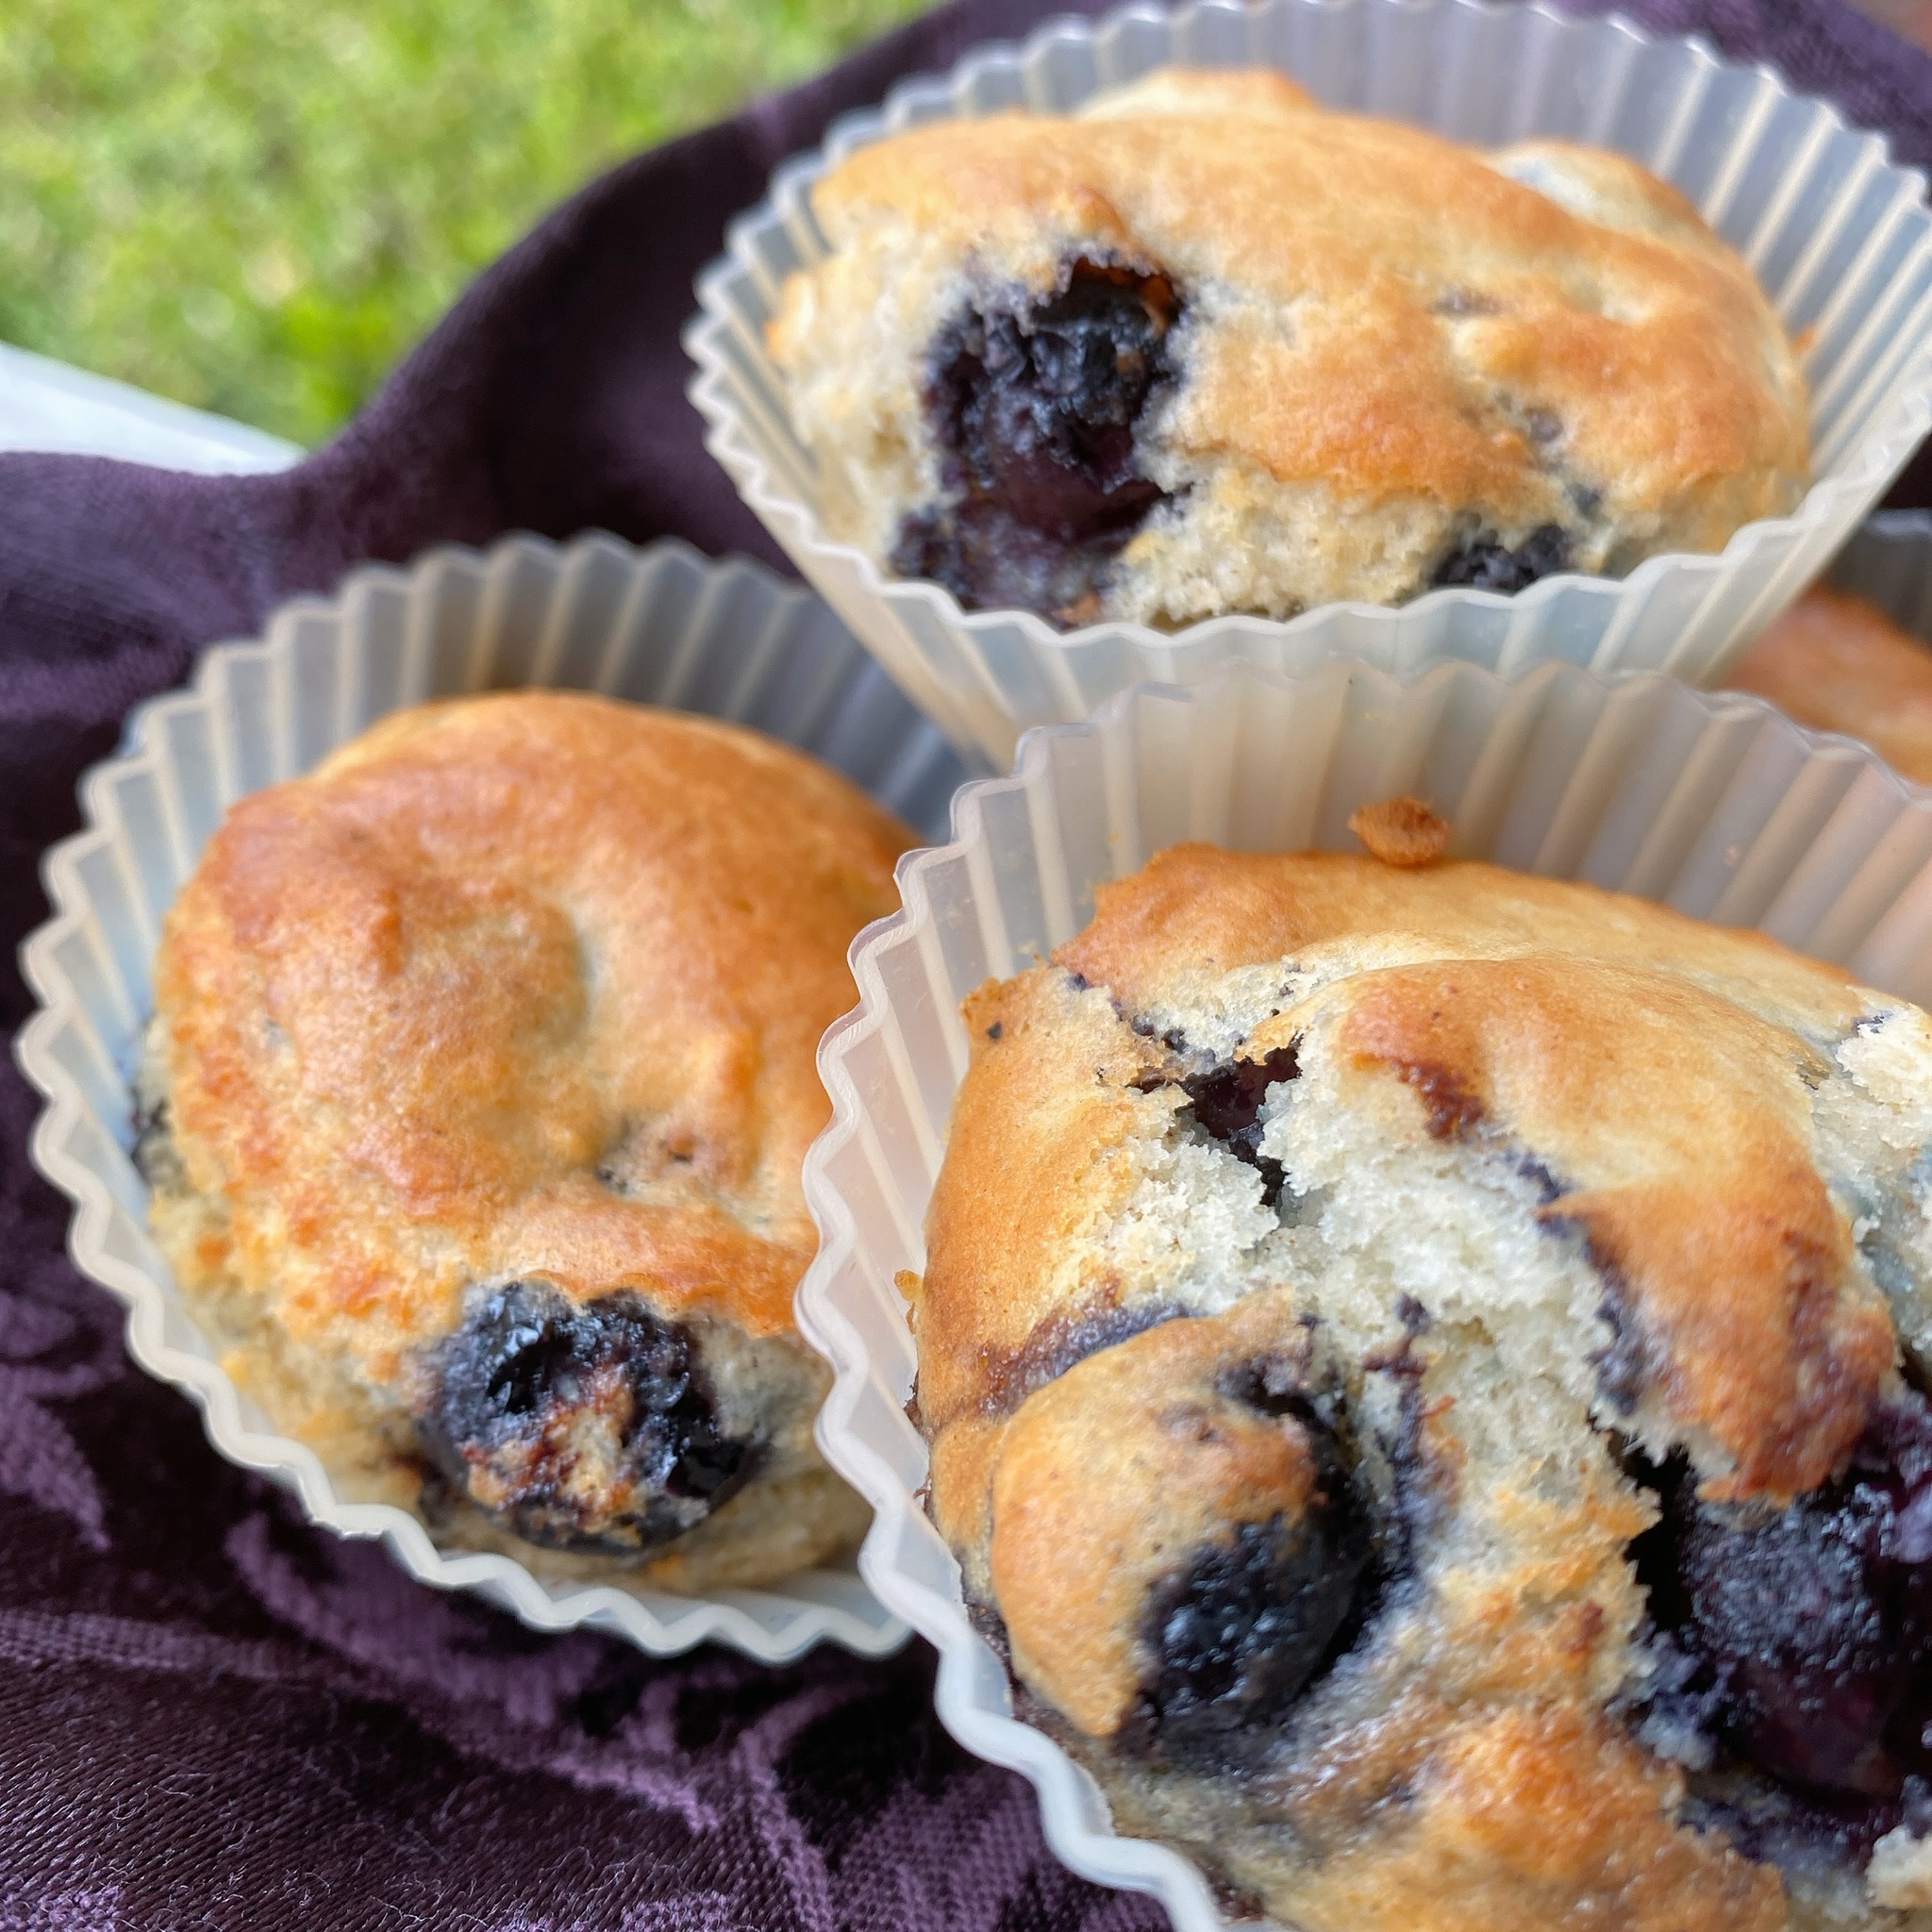 Air Fryer Blueberry Muffins